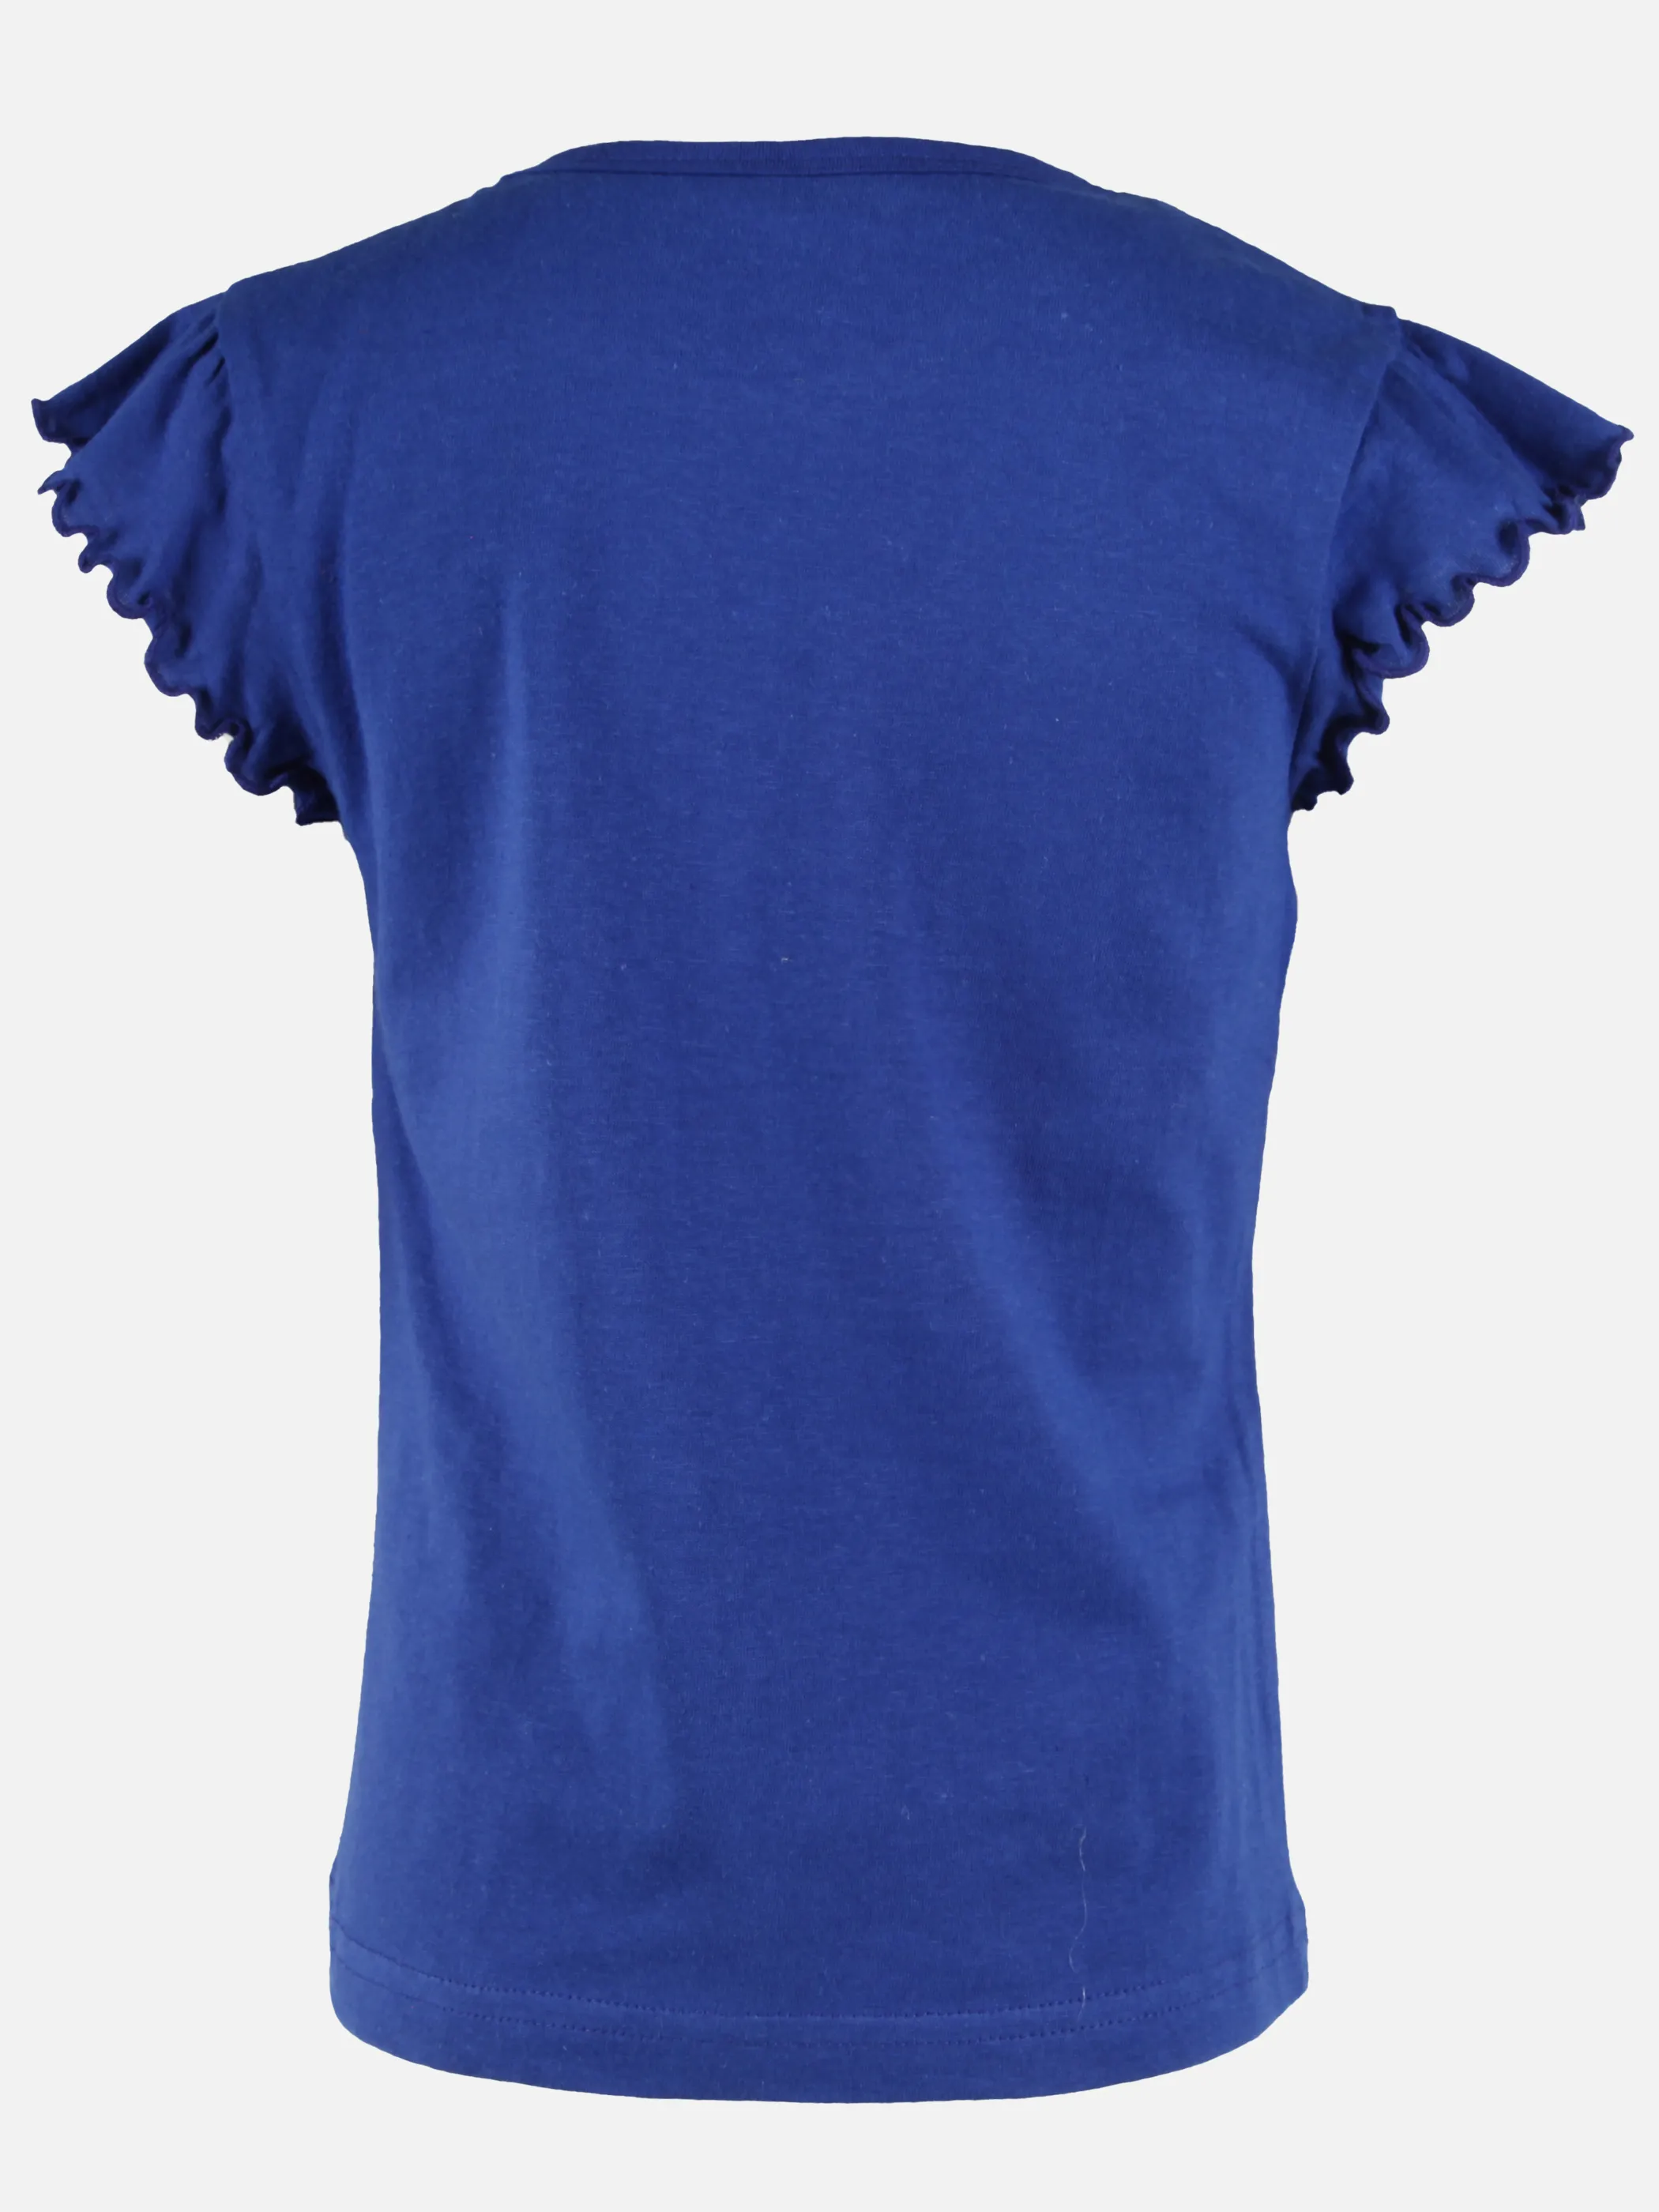 Frozen KM Frozen T-Shirt mit Schmetterlingsärmeln in blau Blau 892448 BLAU 2